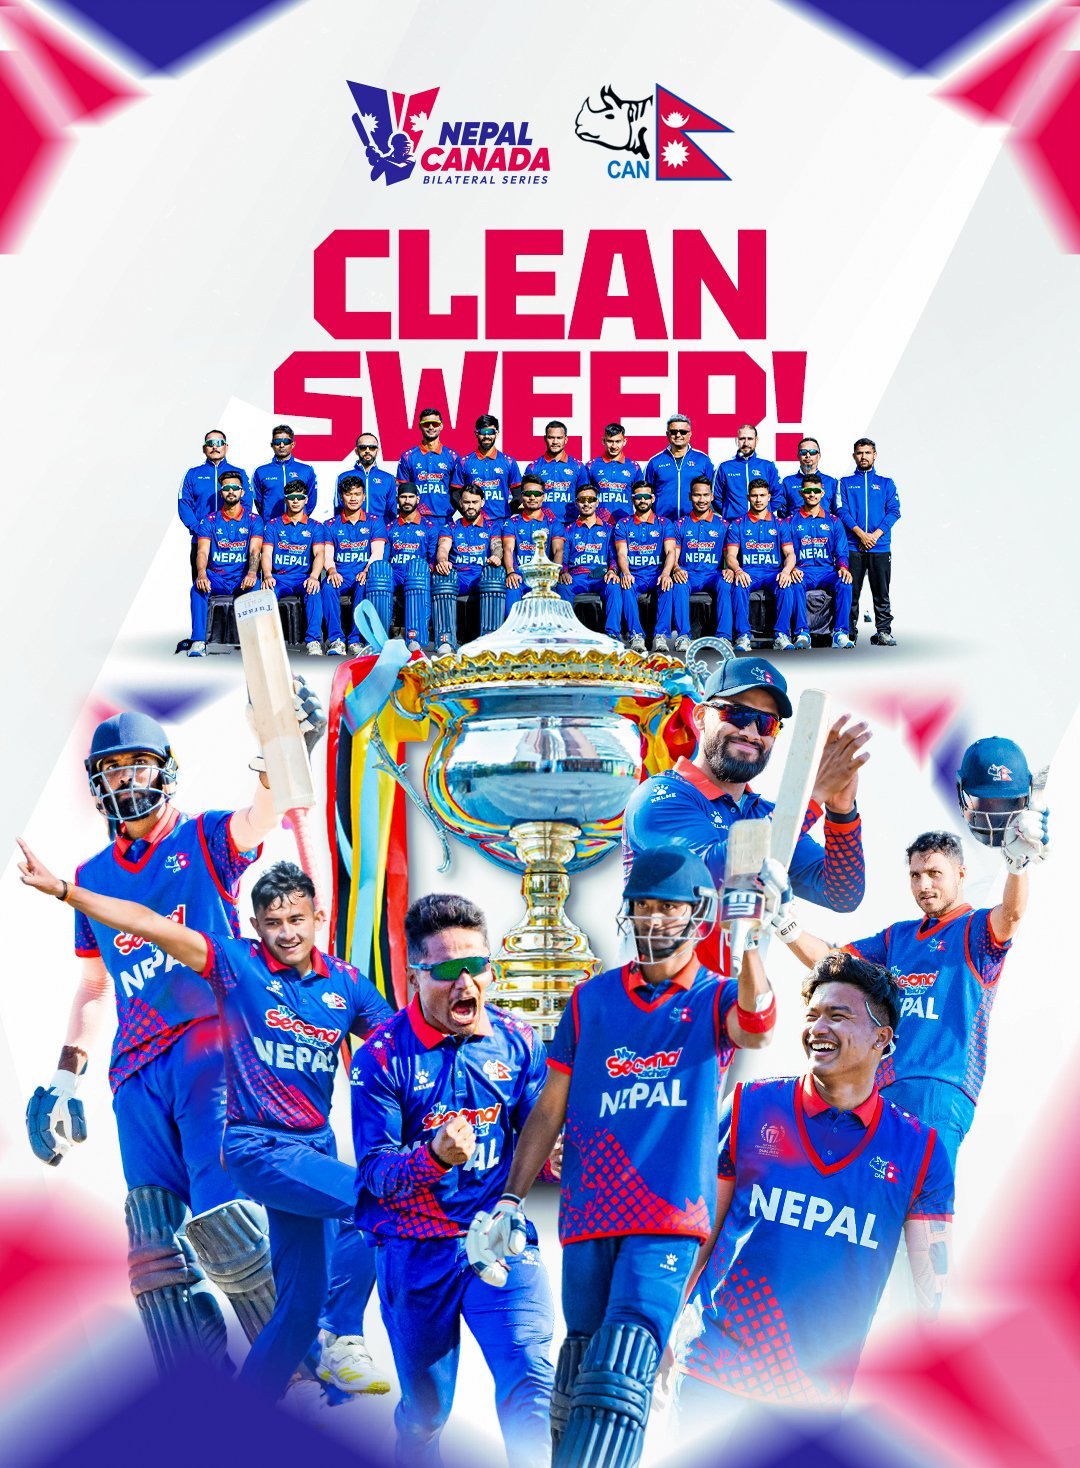 Nepal secures clean sweep in Bilateral ODI Series against Canada